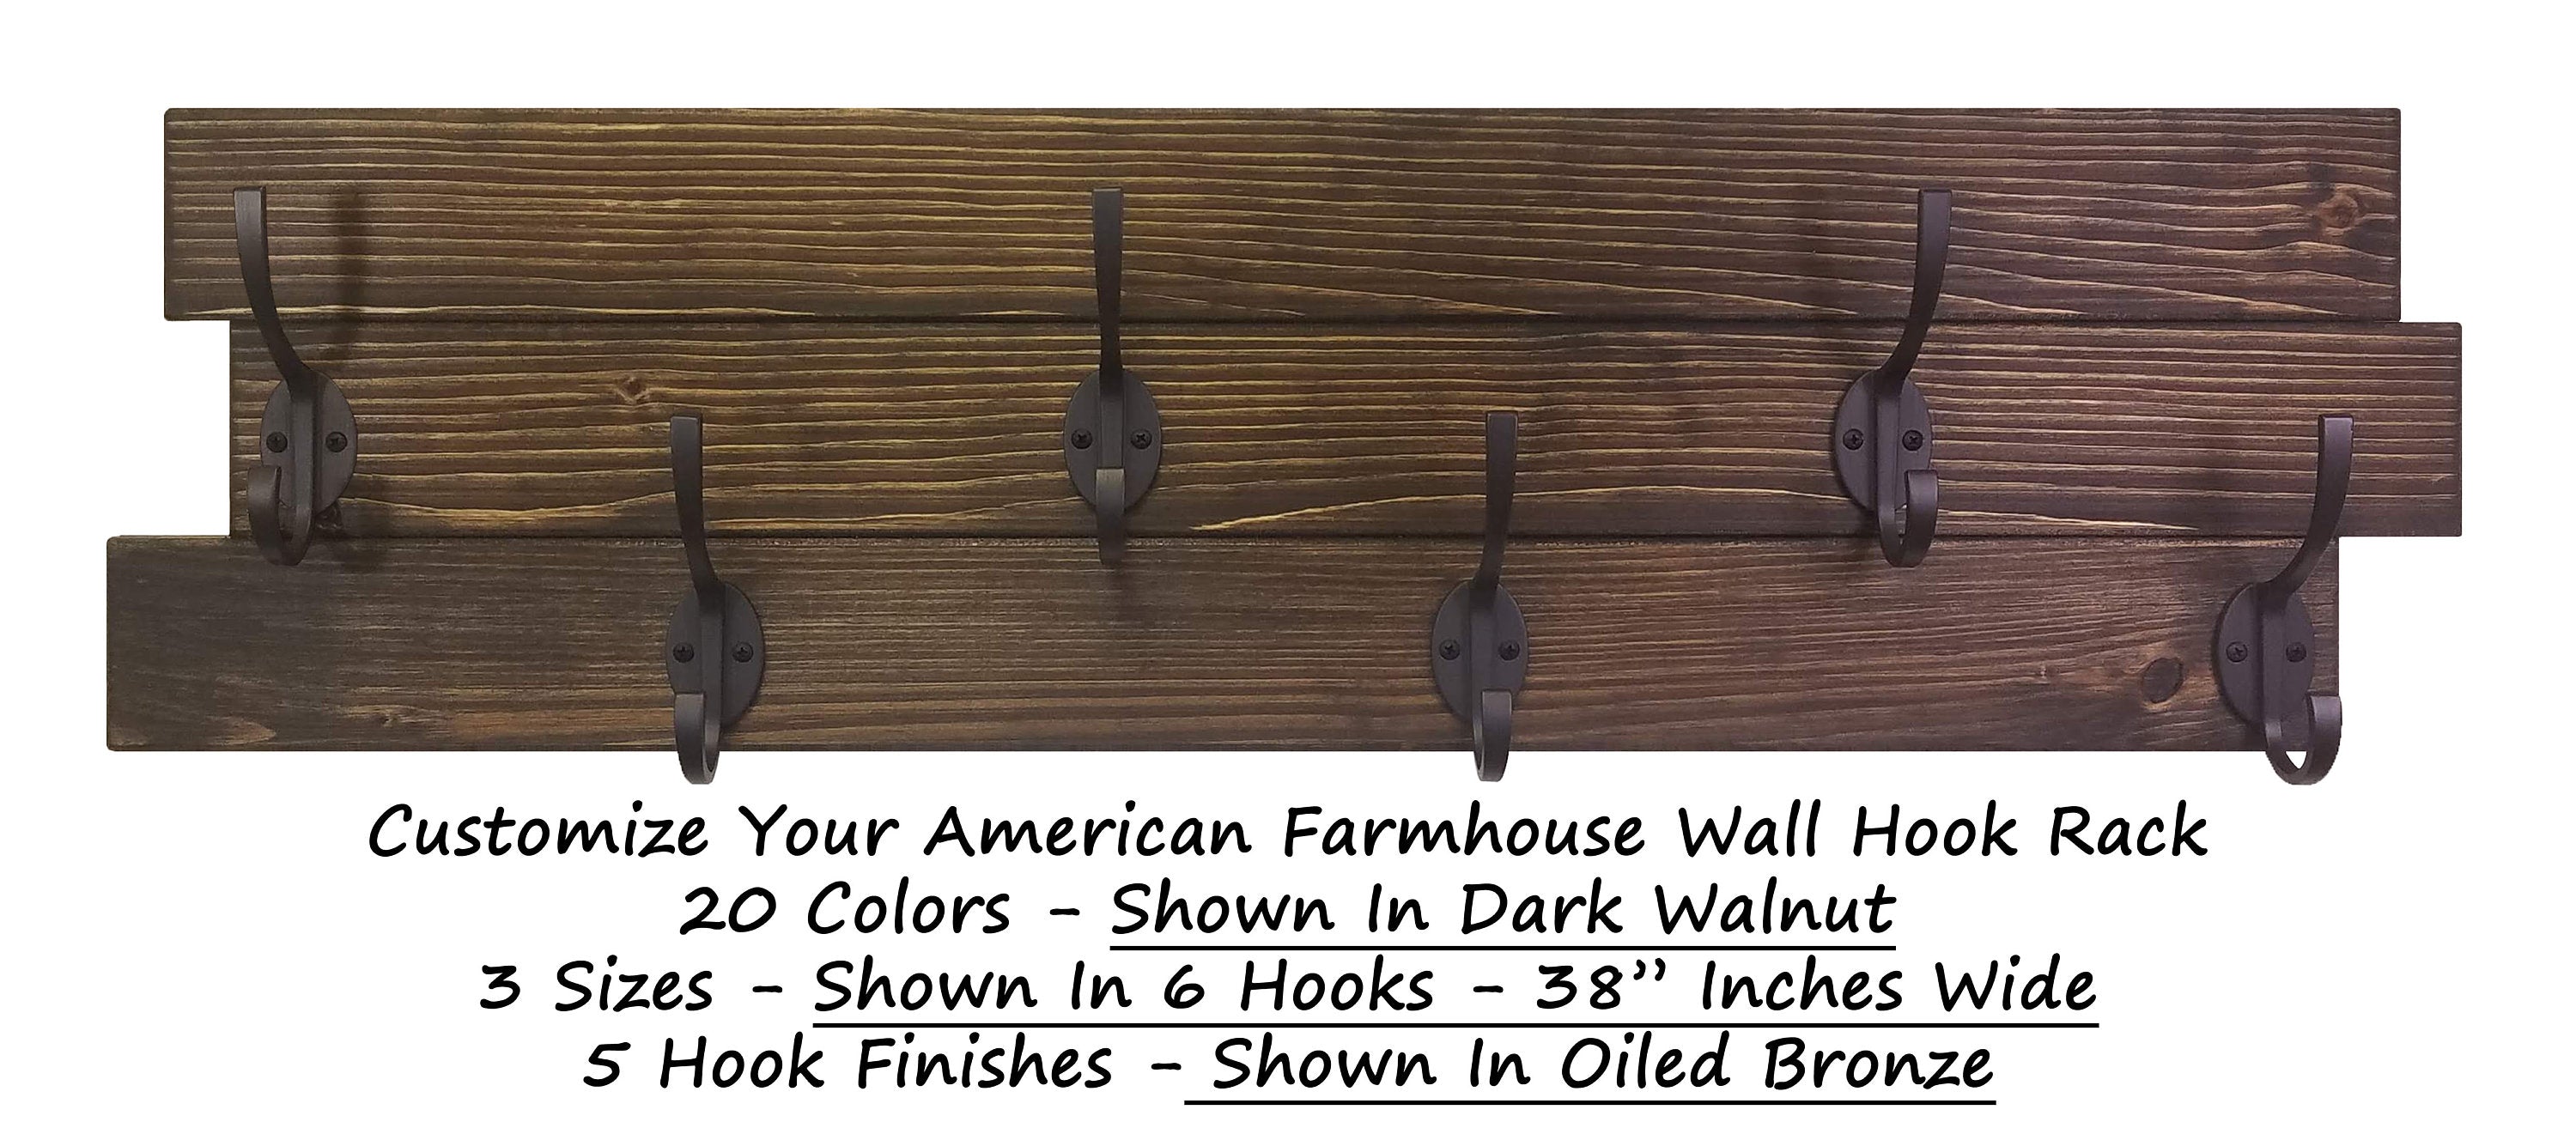 American Farmhouse Wood Wall Hook Rack - 20 Stain Colors, Shown in Dark Walnut